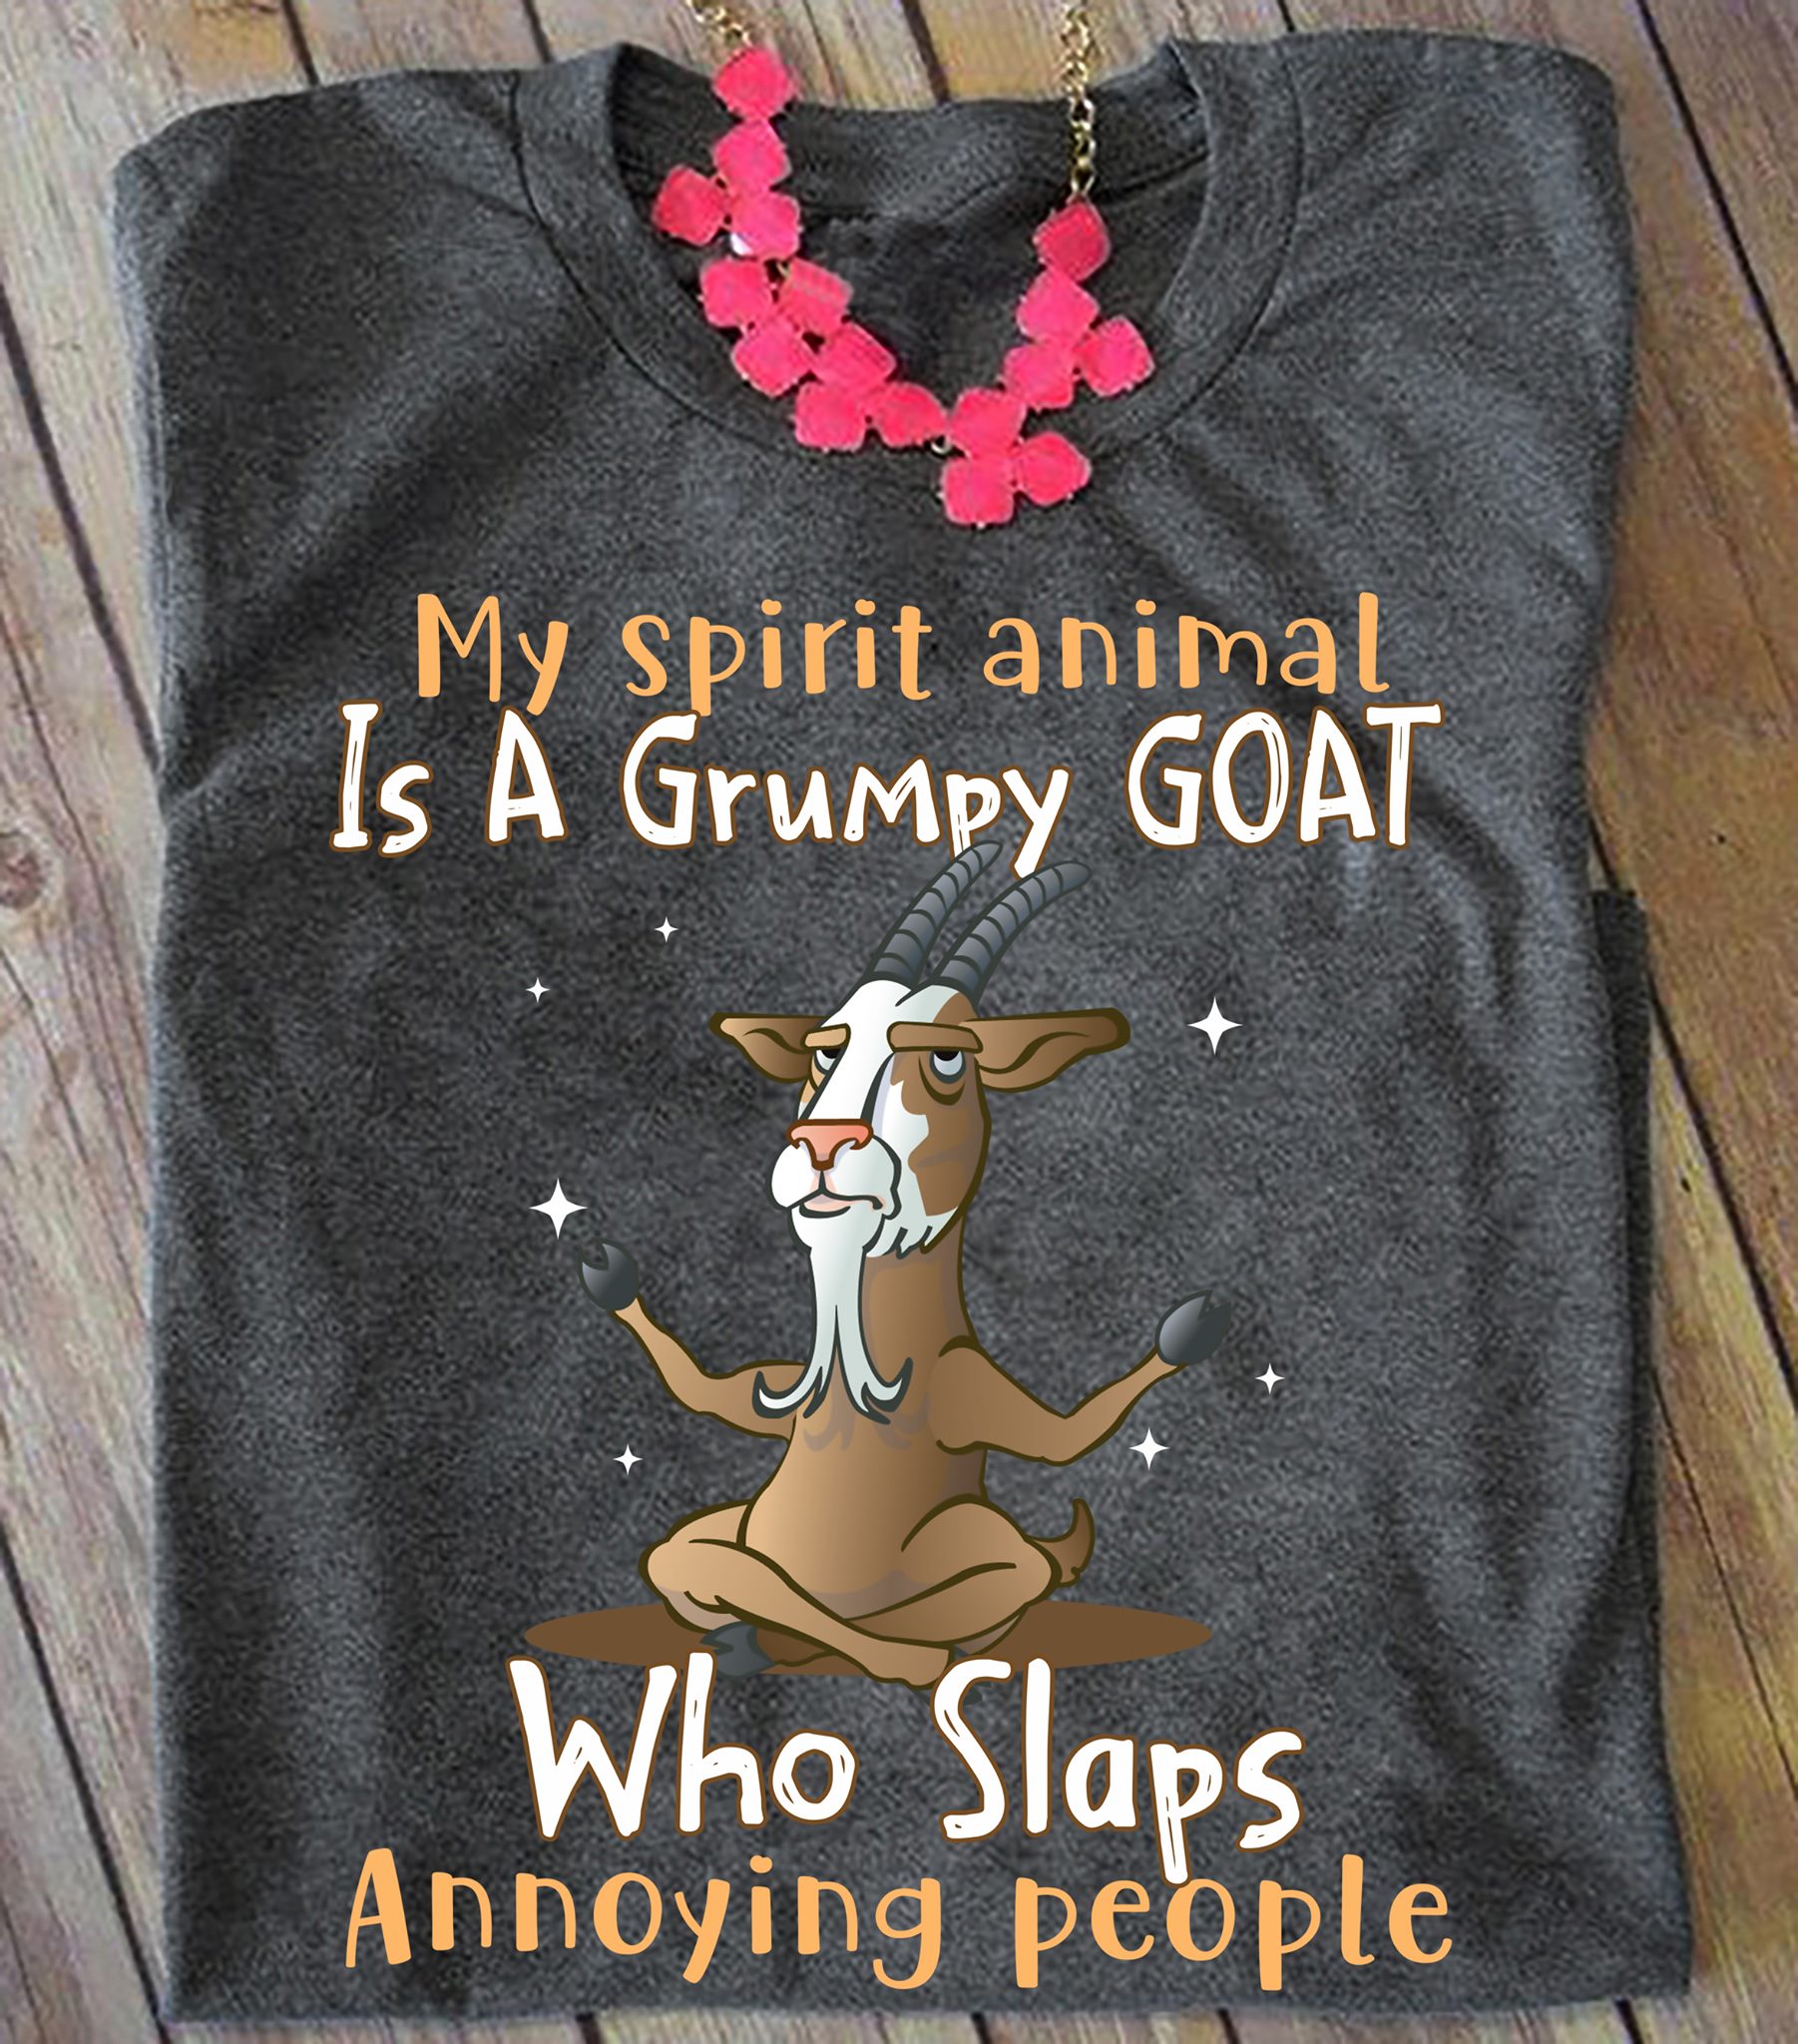 My spirit animal is a grumpy goat who slaps annoying people